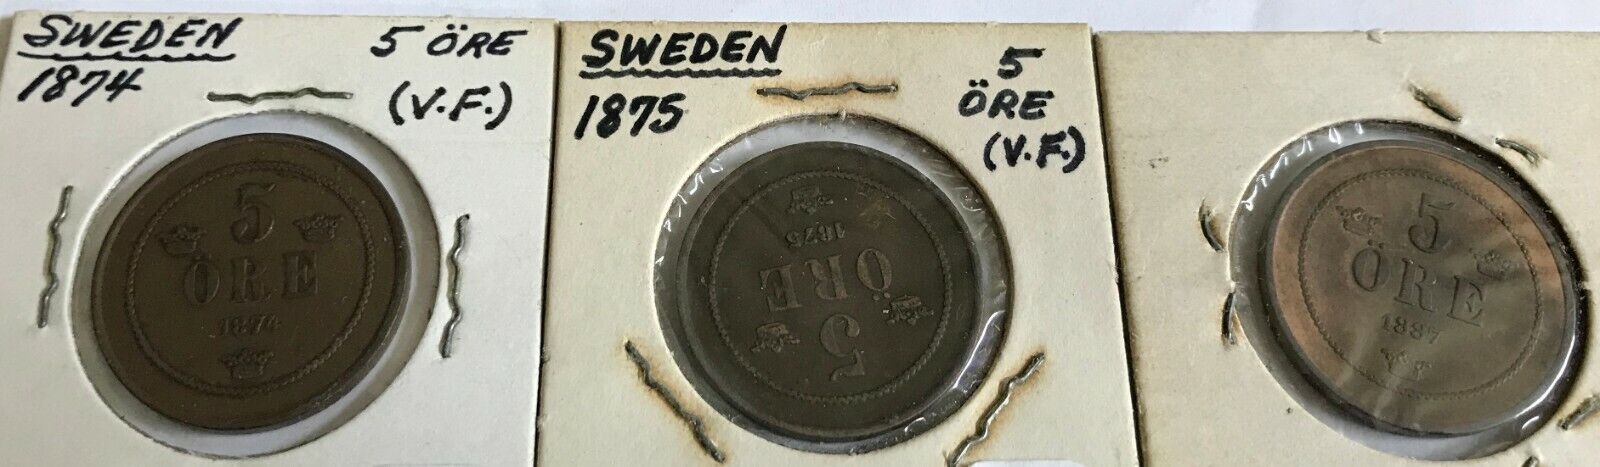 Sweden - lot of 3 coins - 5 ore - 1874 VF, 1875 VF, 1887 EF - KM 736 Без бренда - фотография #3